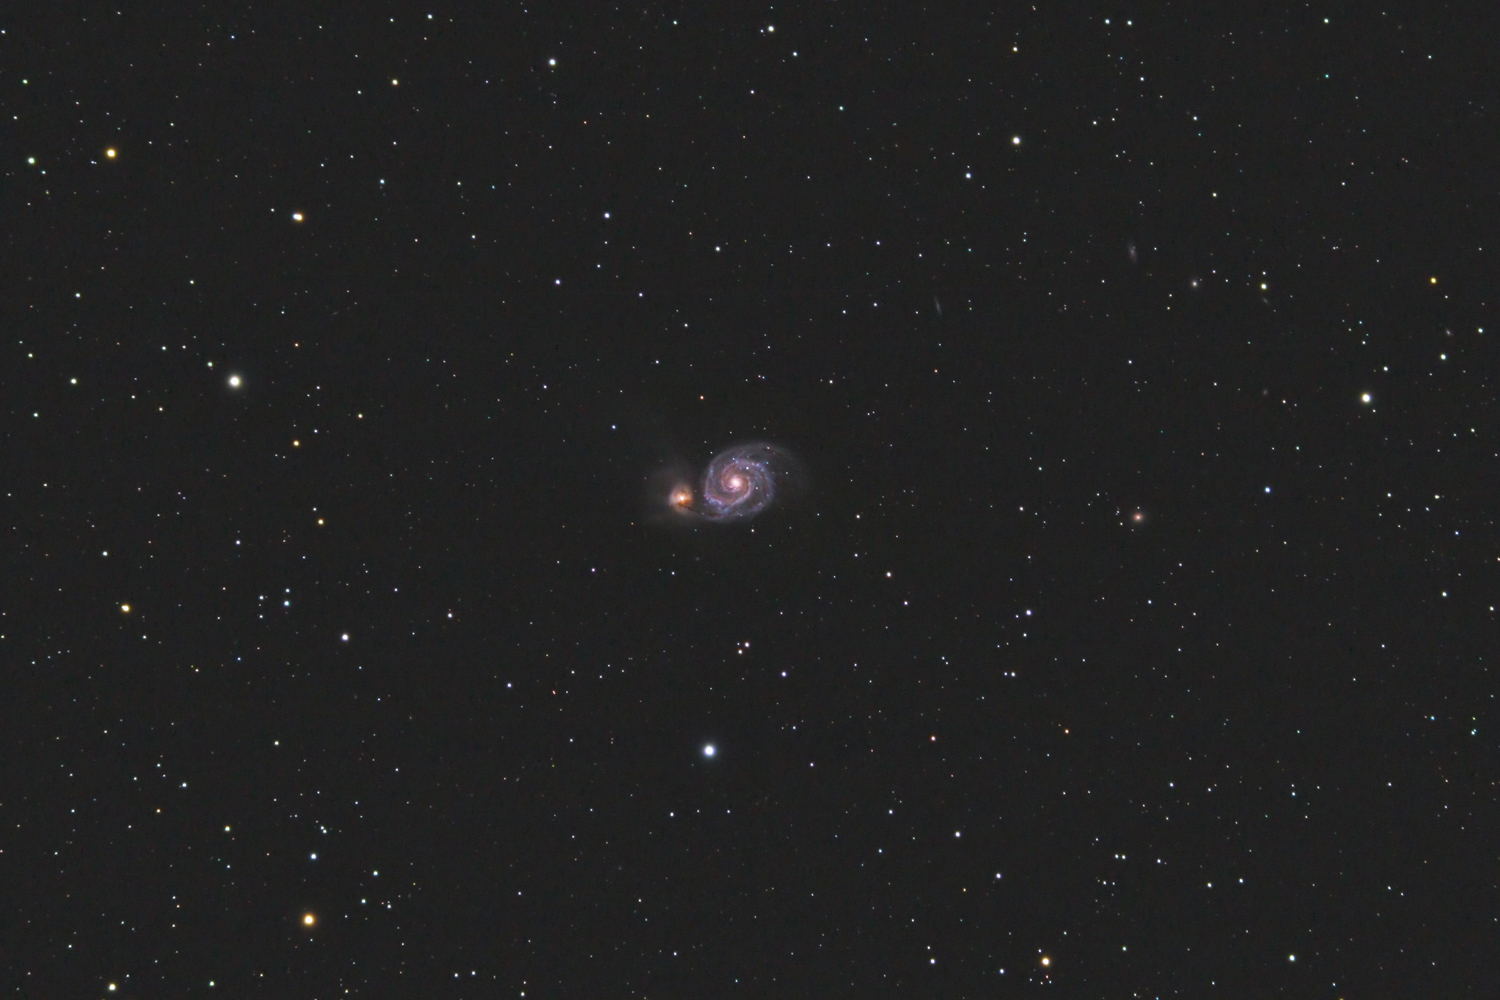 M51 - Whirpoolgalaxie M 51